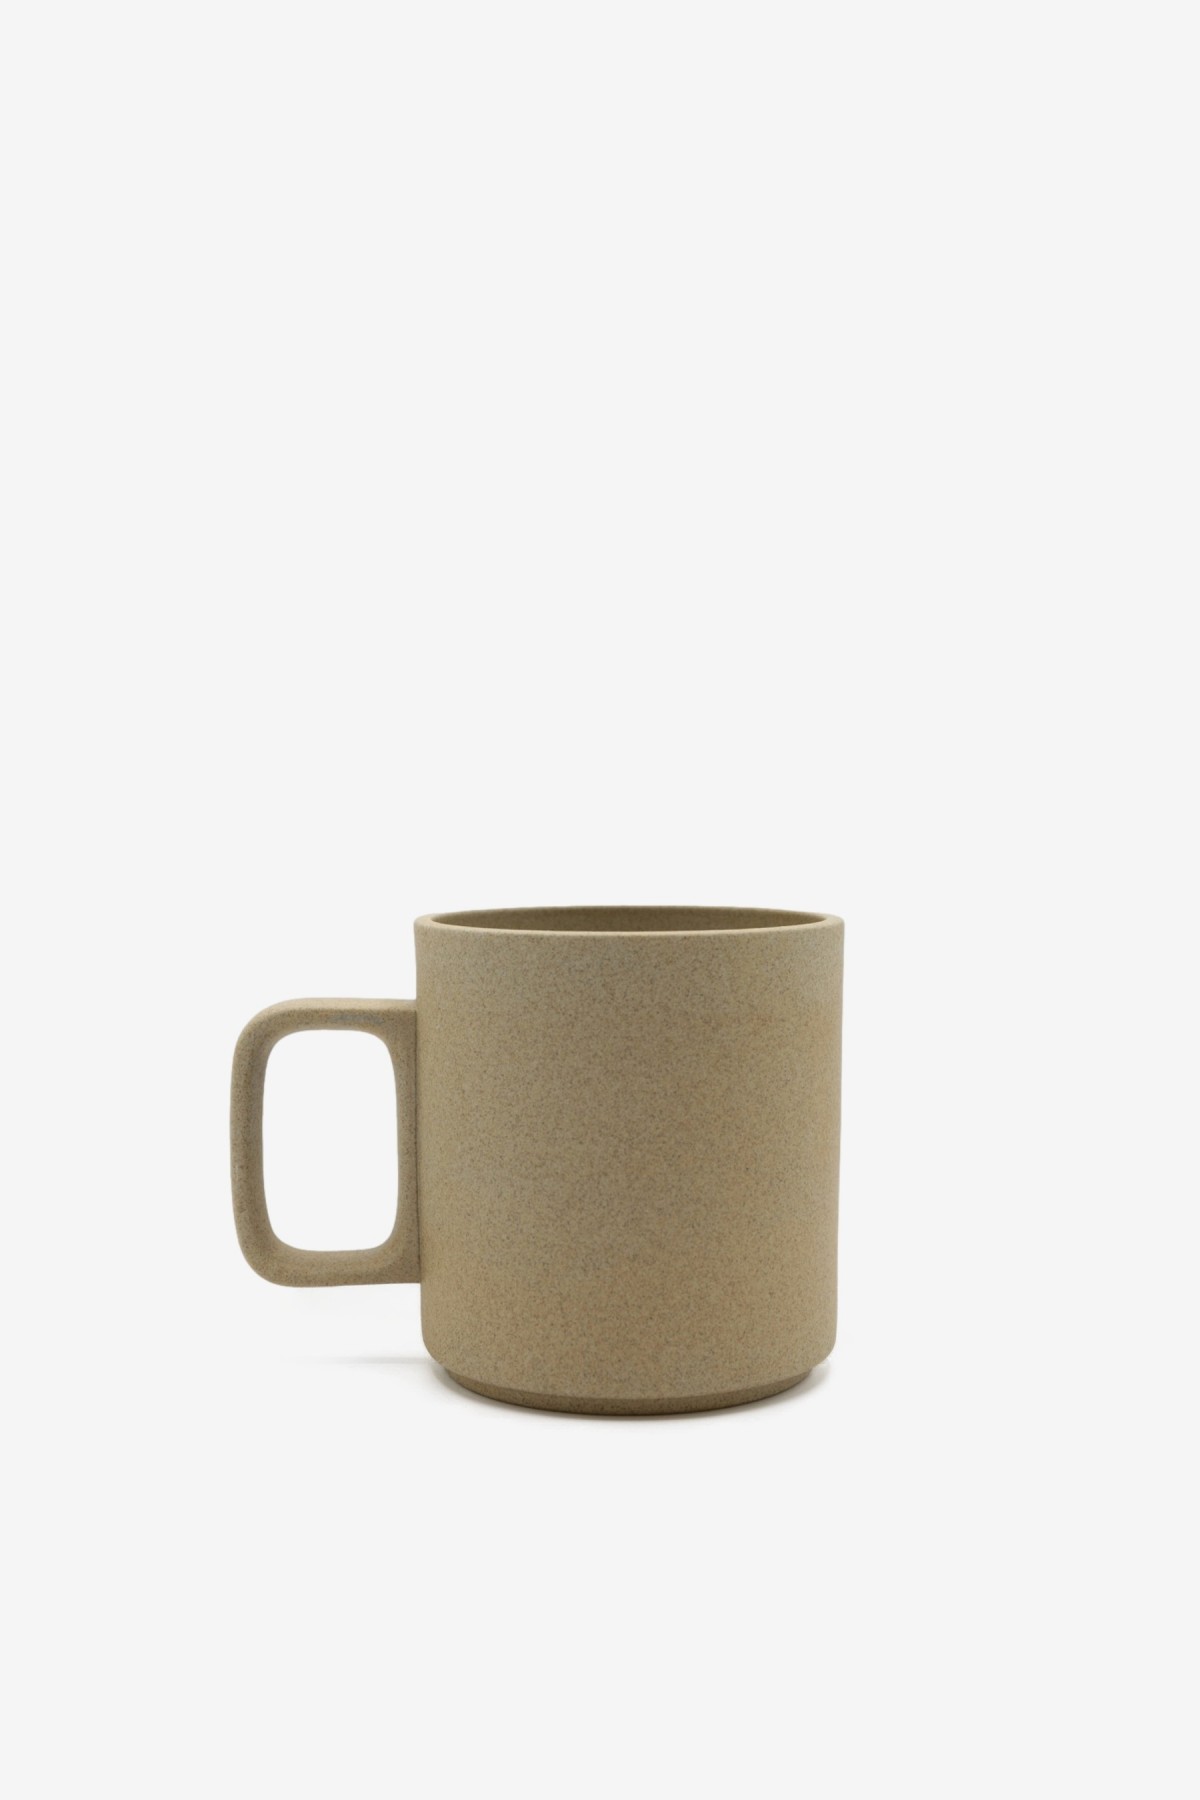 Hasami Porcelain Mug Cup Medium in Sand